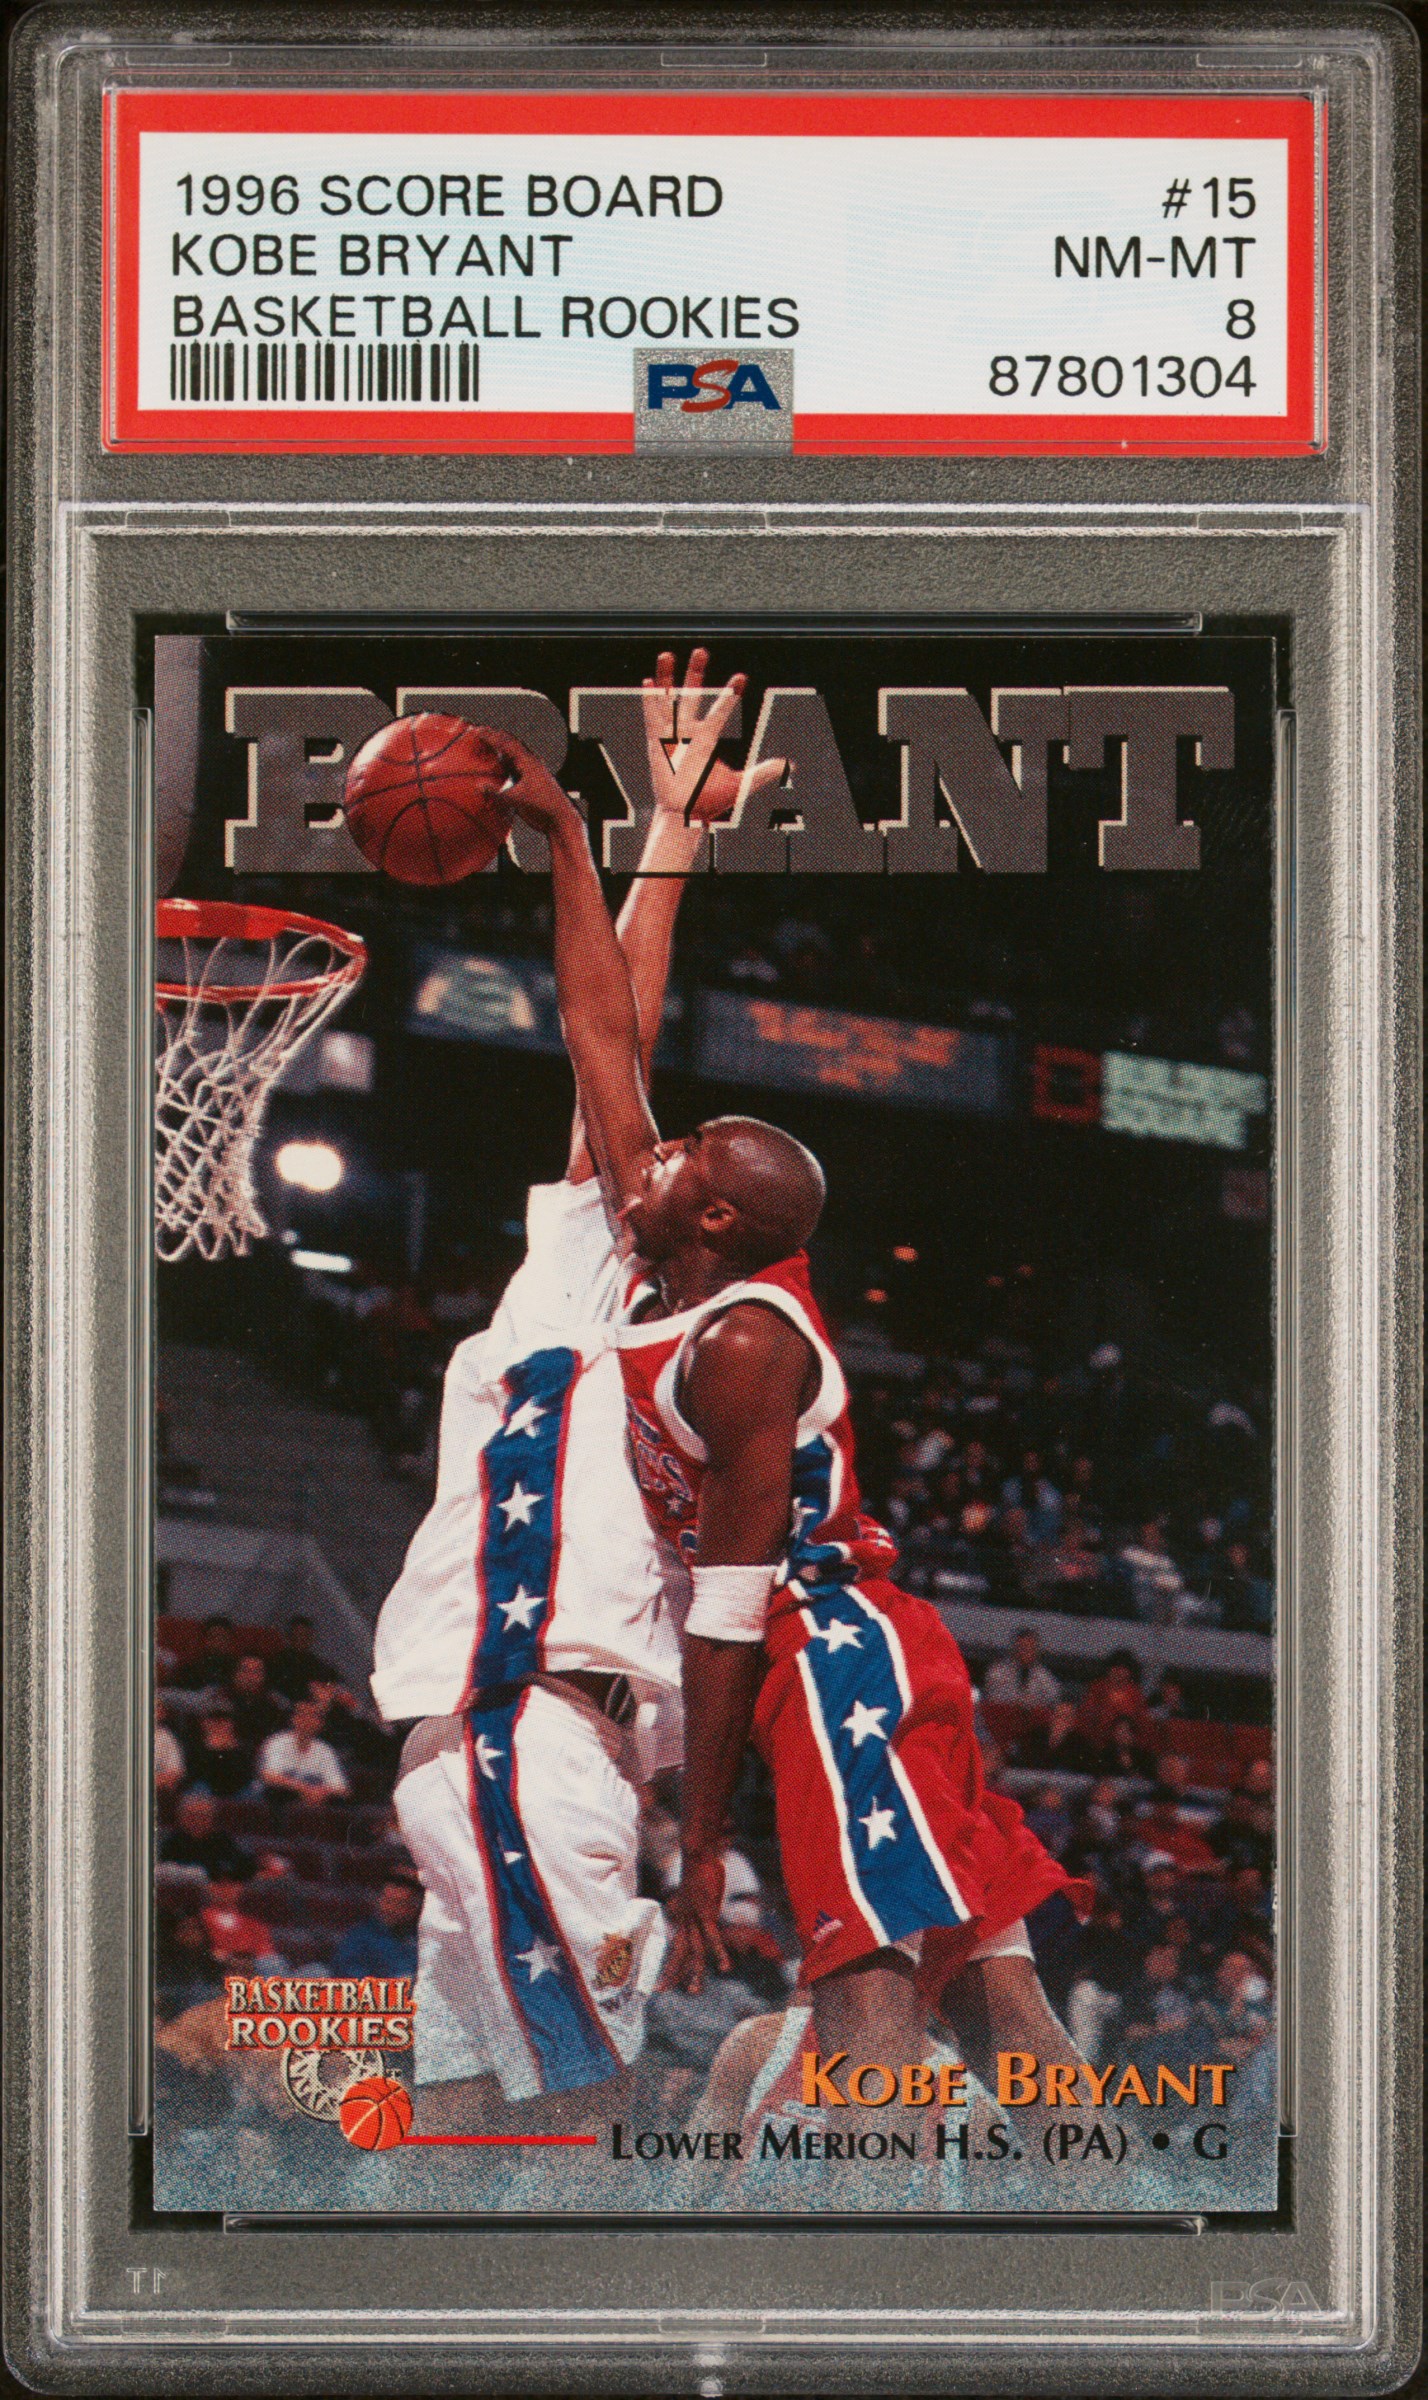 1996-97 Score Board Basketball Rookies #15 Kobe Bryant Rookie Card – PSA NM-MT 8